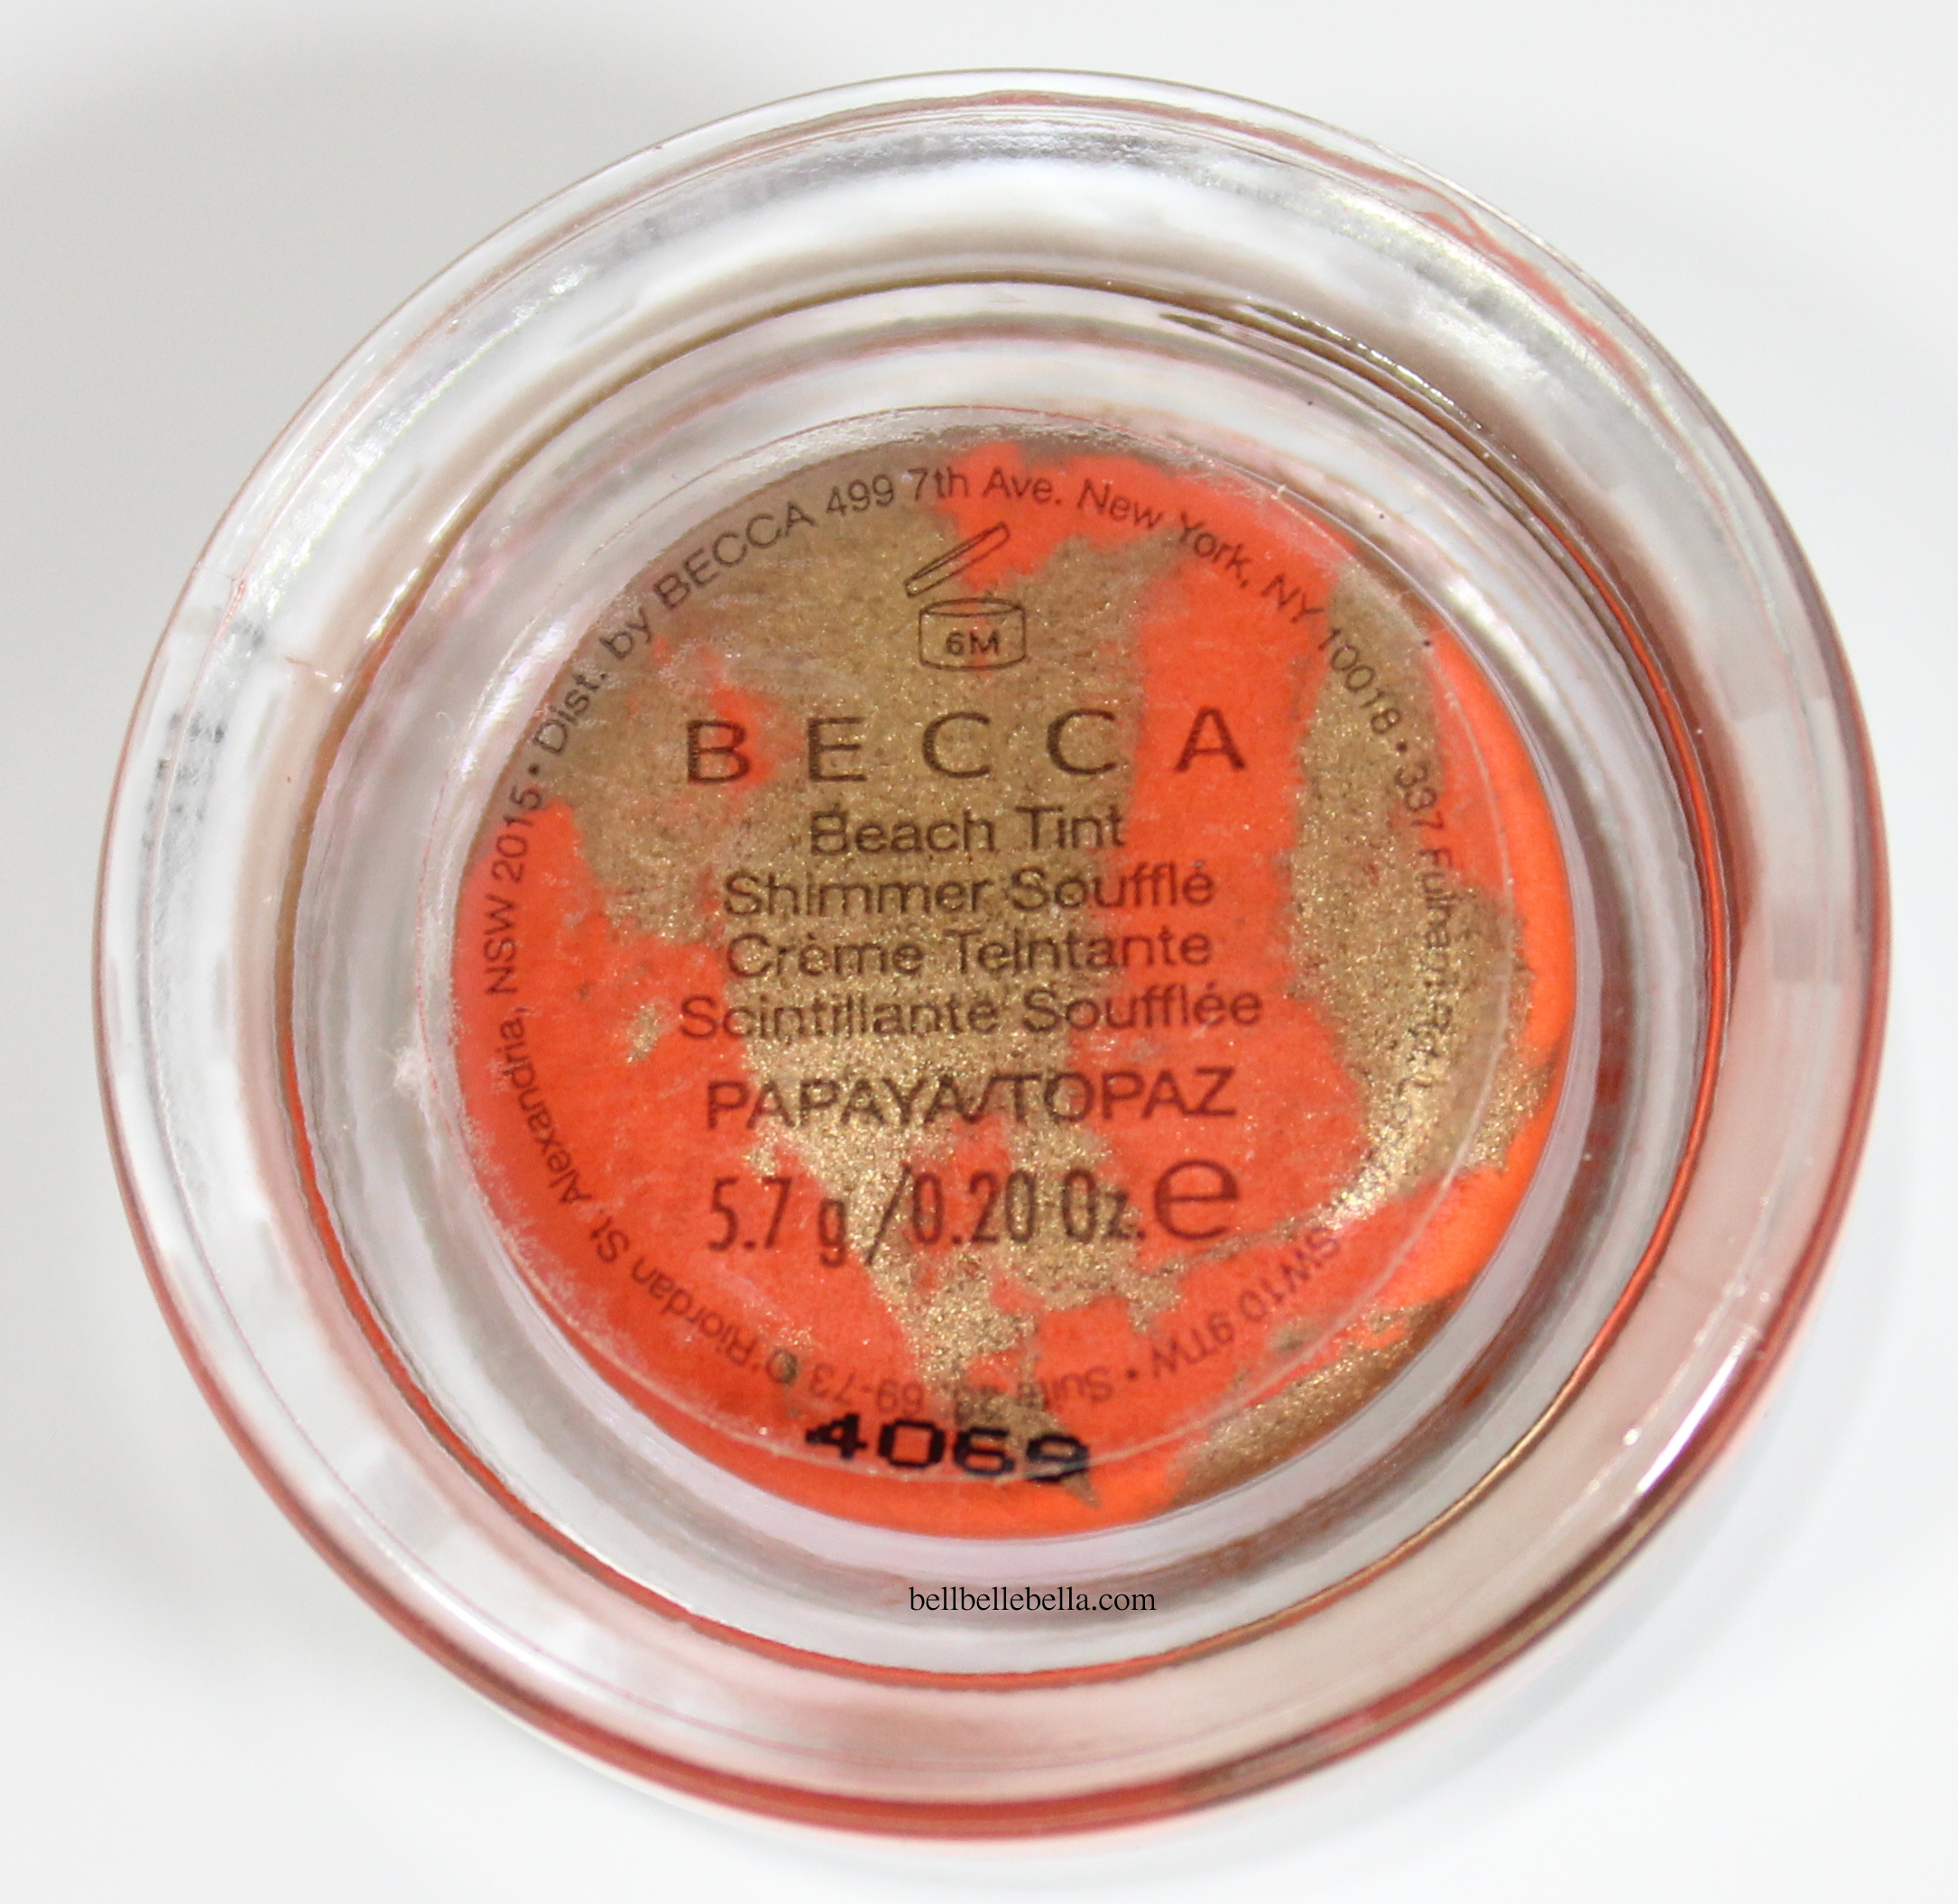 BECCA Cosmetics Beach Shimmer Tint Soufflé in Papaya/Topaz